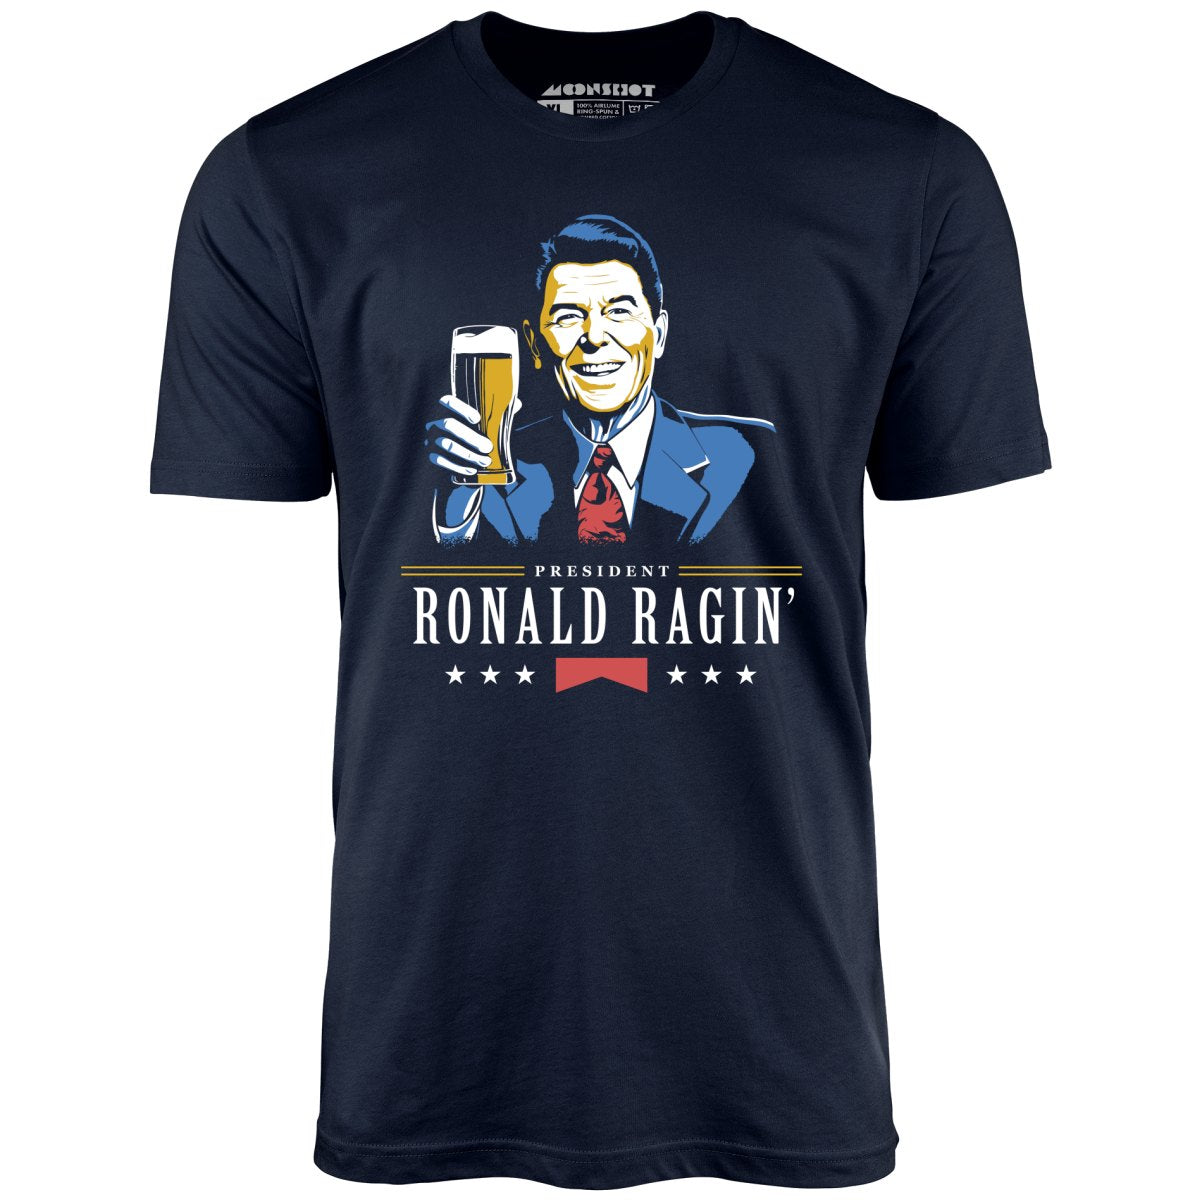 President Ronald Ragin' - Unisex T-Shirt